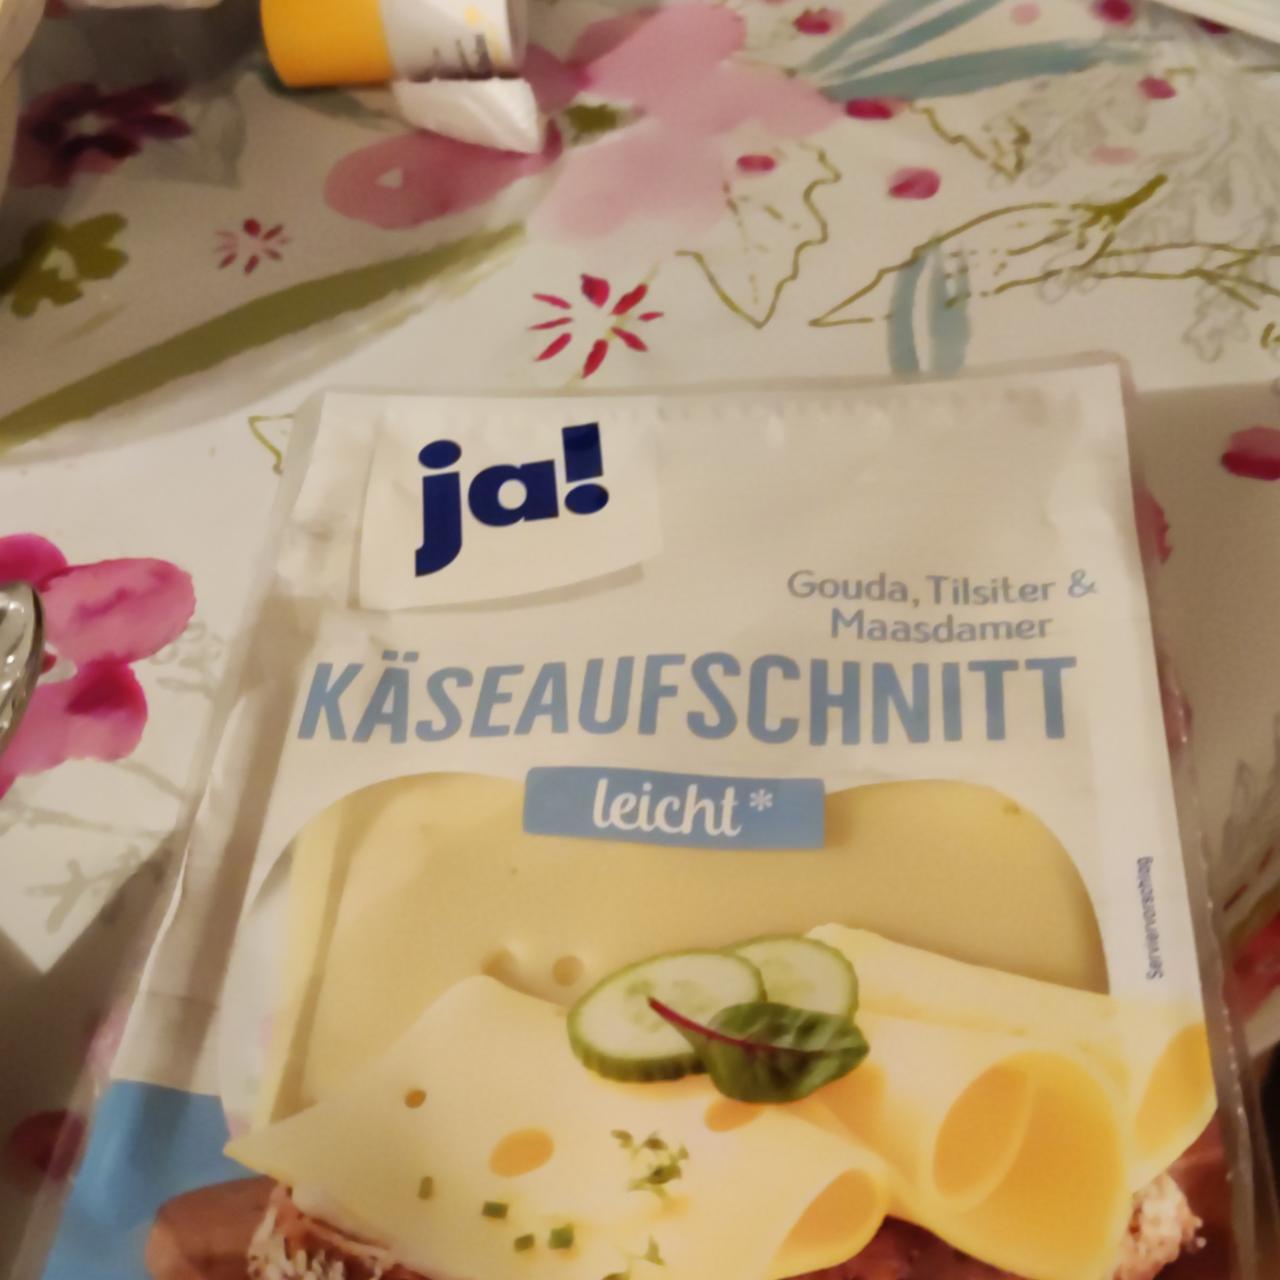 Фото - сыр 3-fach sortierter Käseaufschnitt Gutes Land